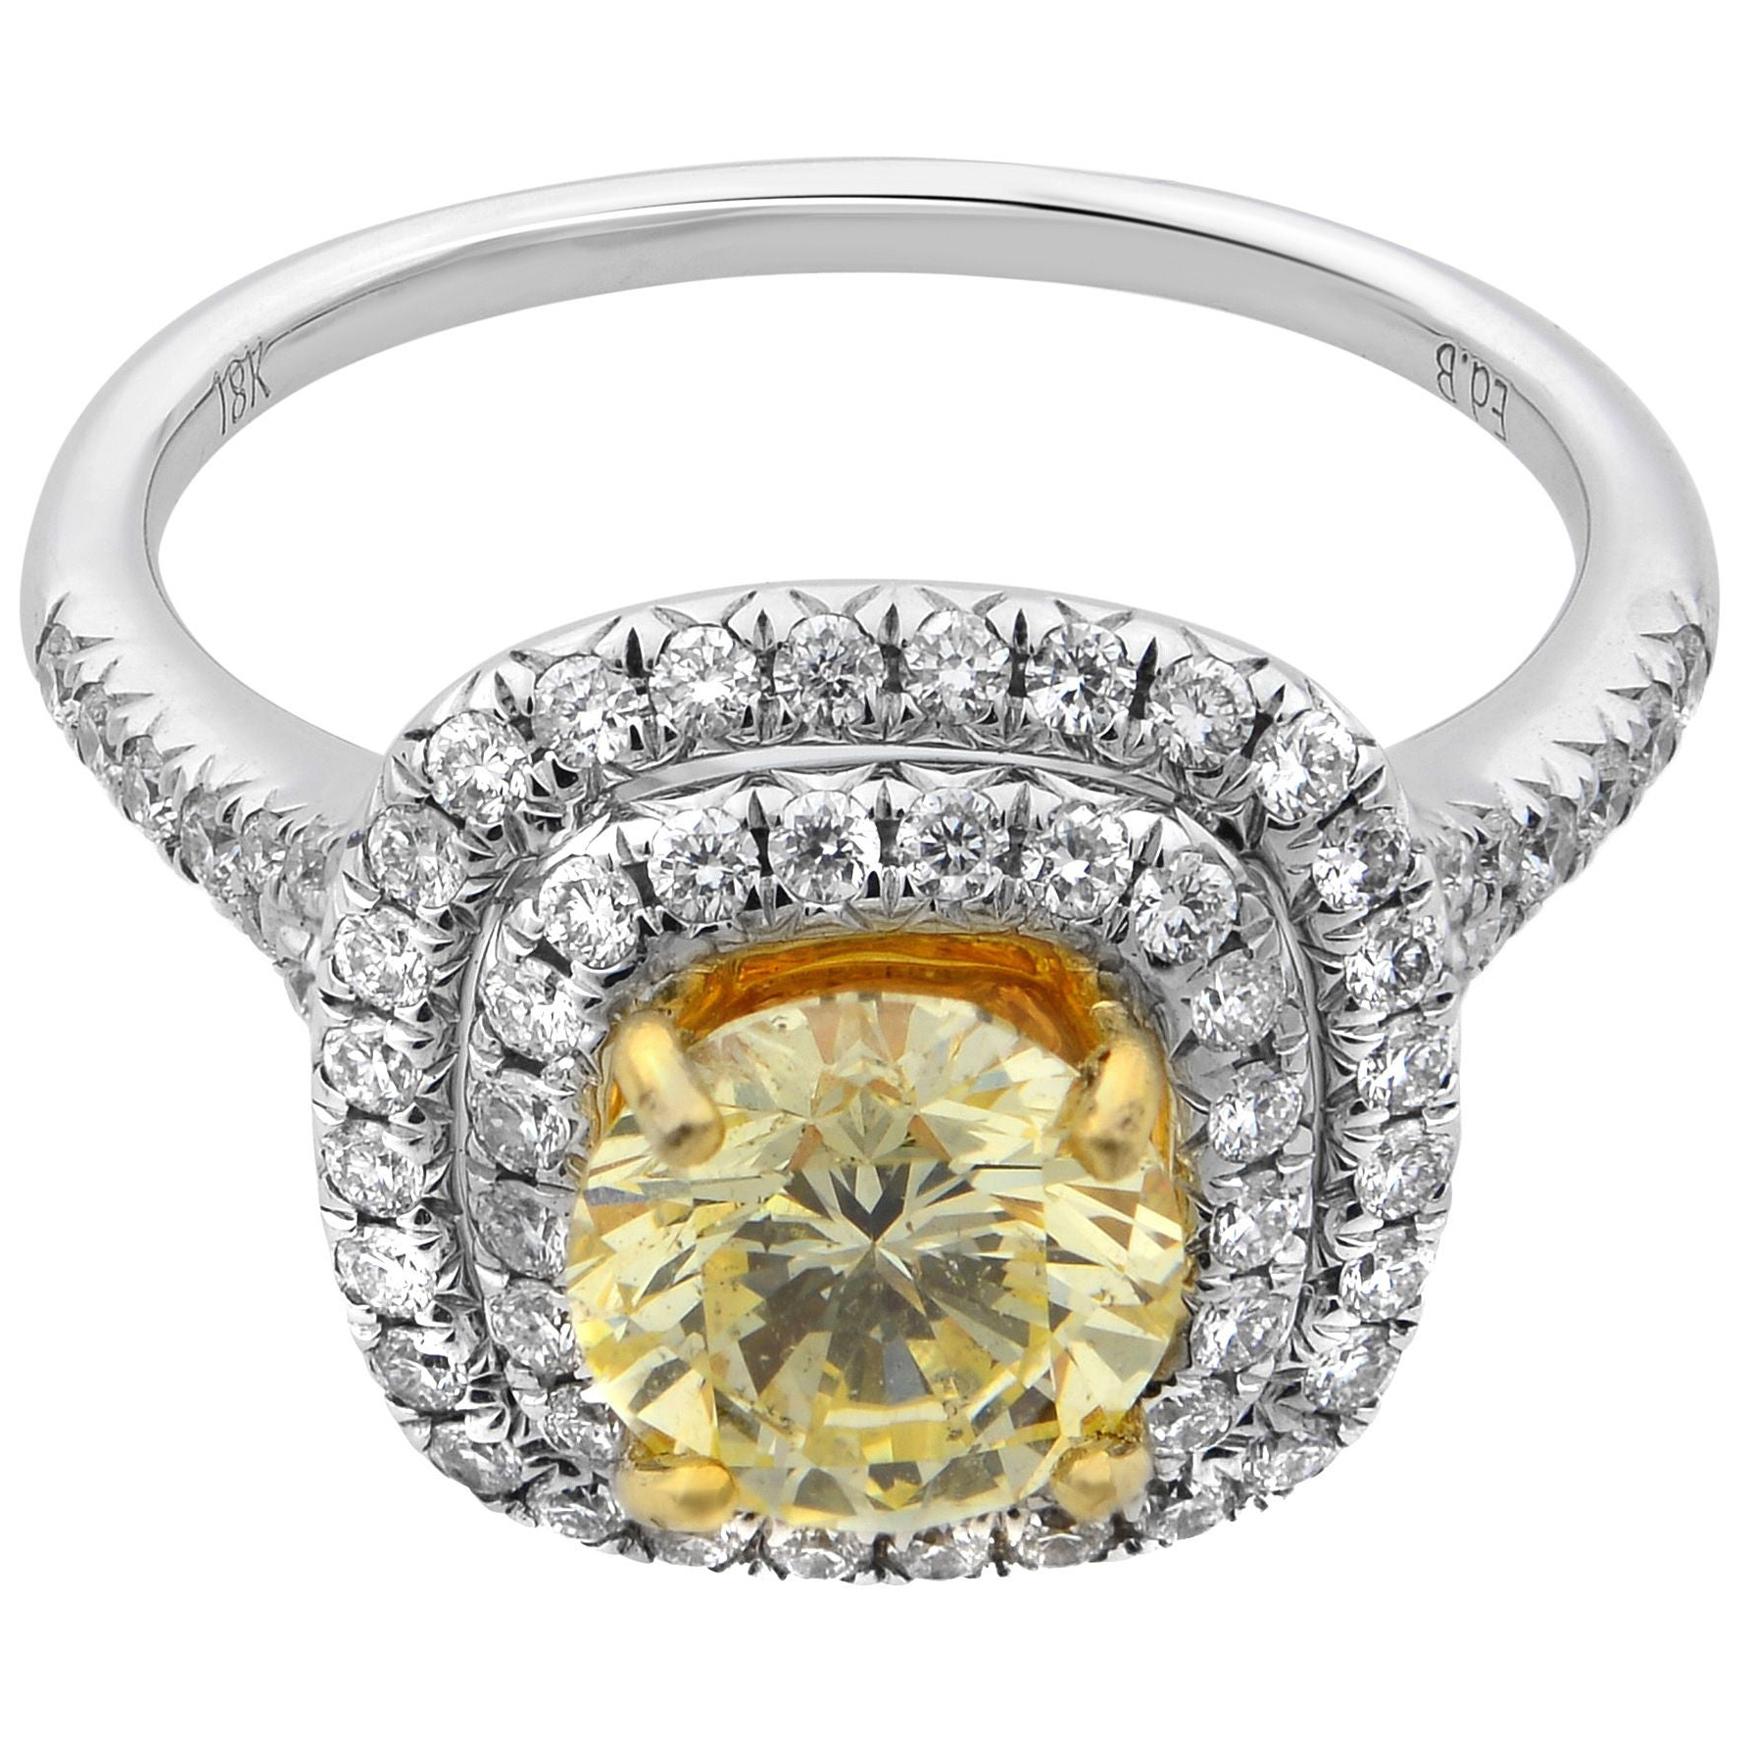 Rachel Koen 18 Karat White Gold Round Cut Fancy Yellow Diamond Ring 1.13 Carat